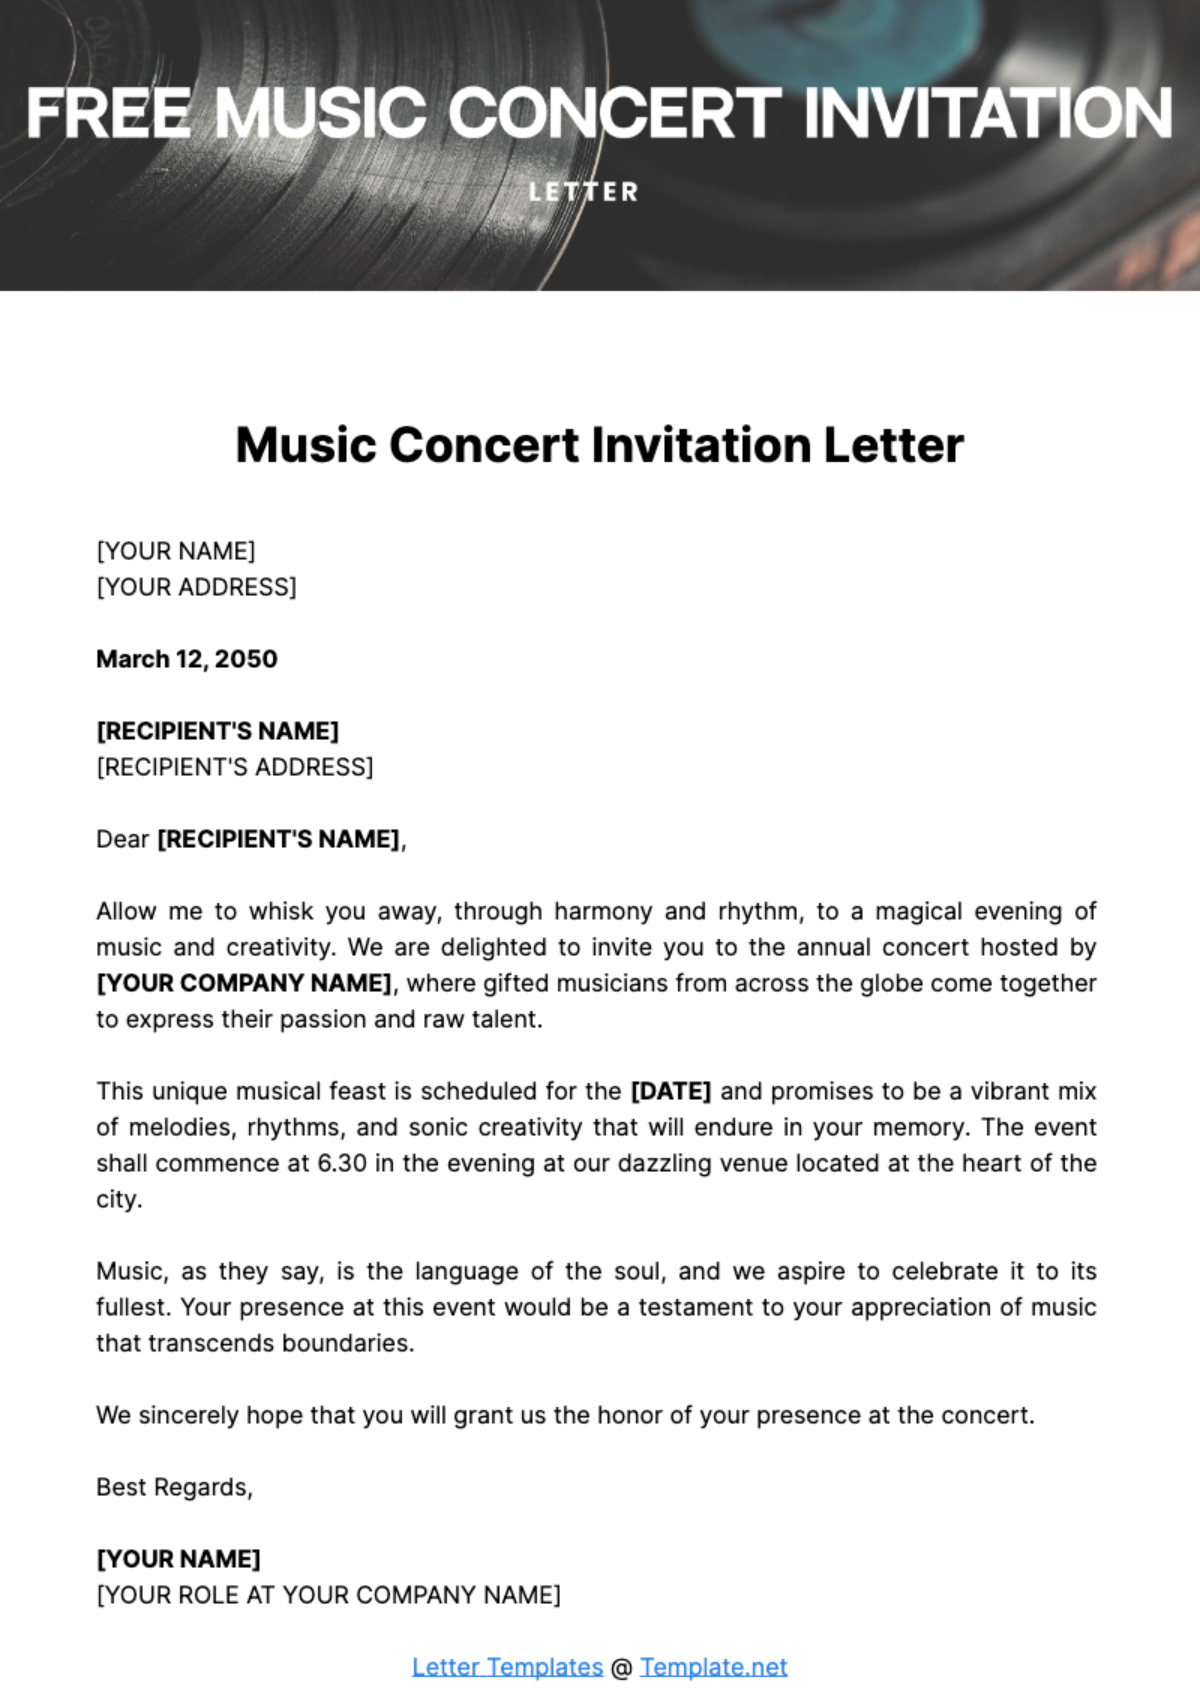 Free Music Concert Invitation Letter Template